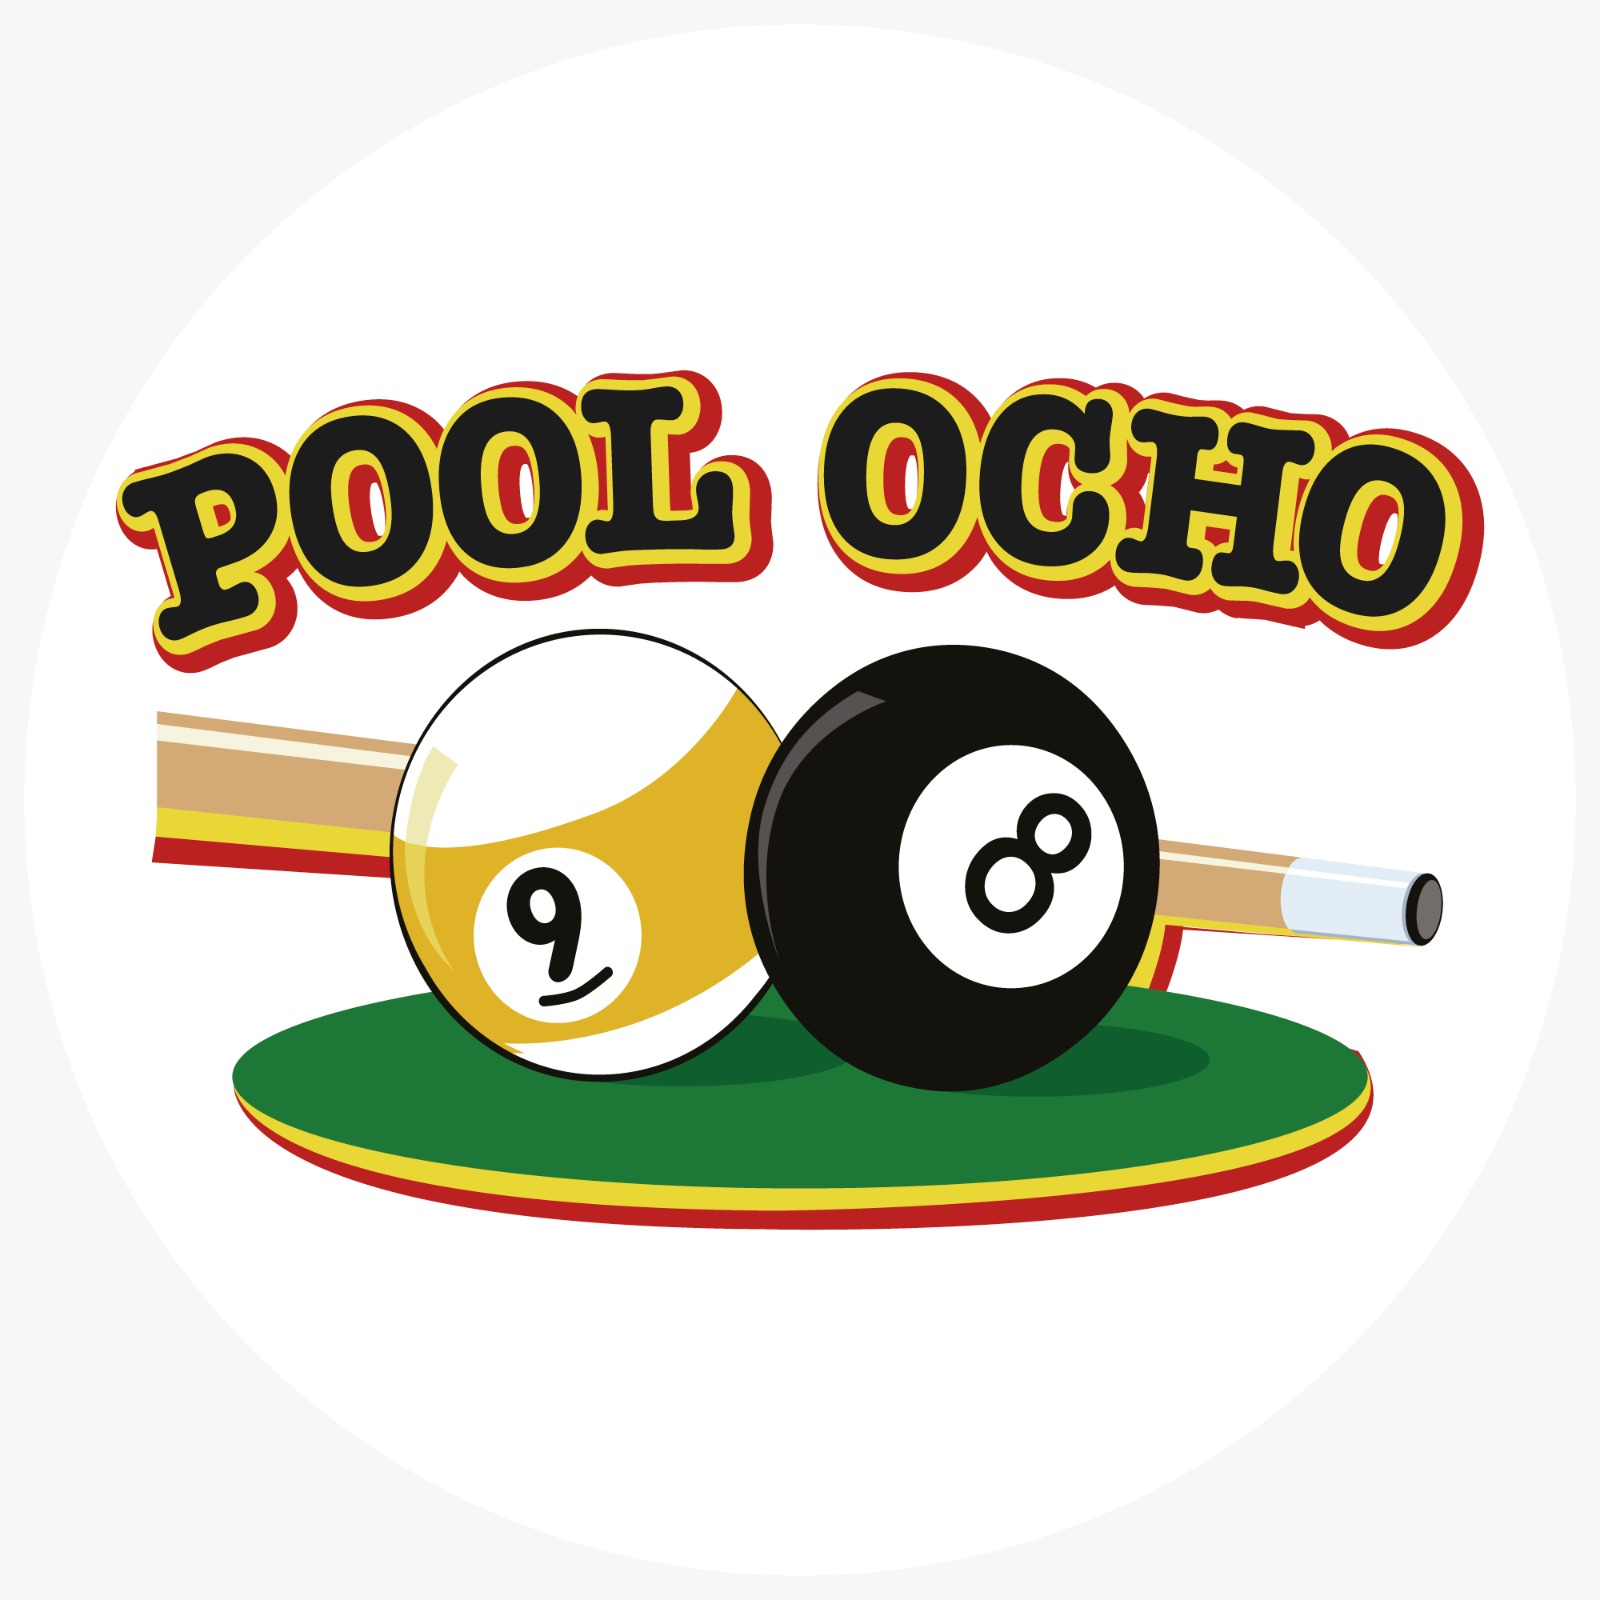 Poolocho web site